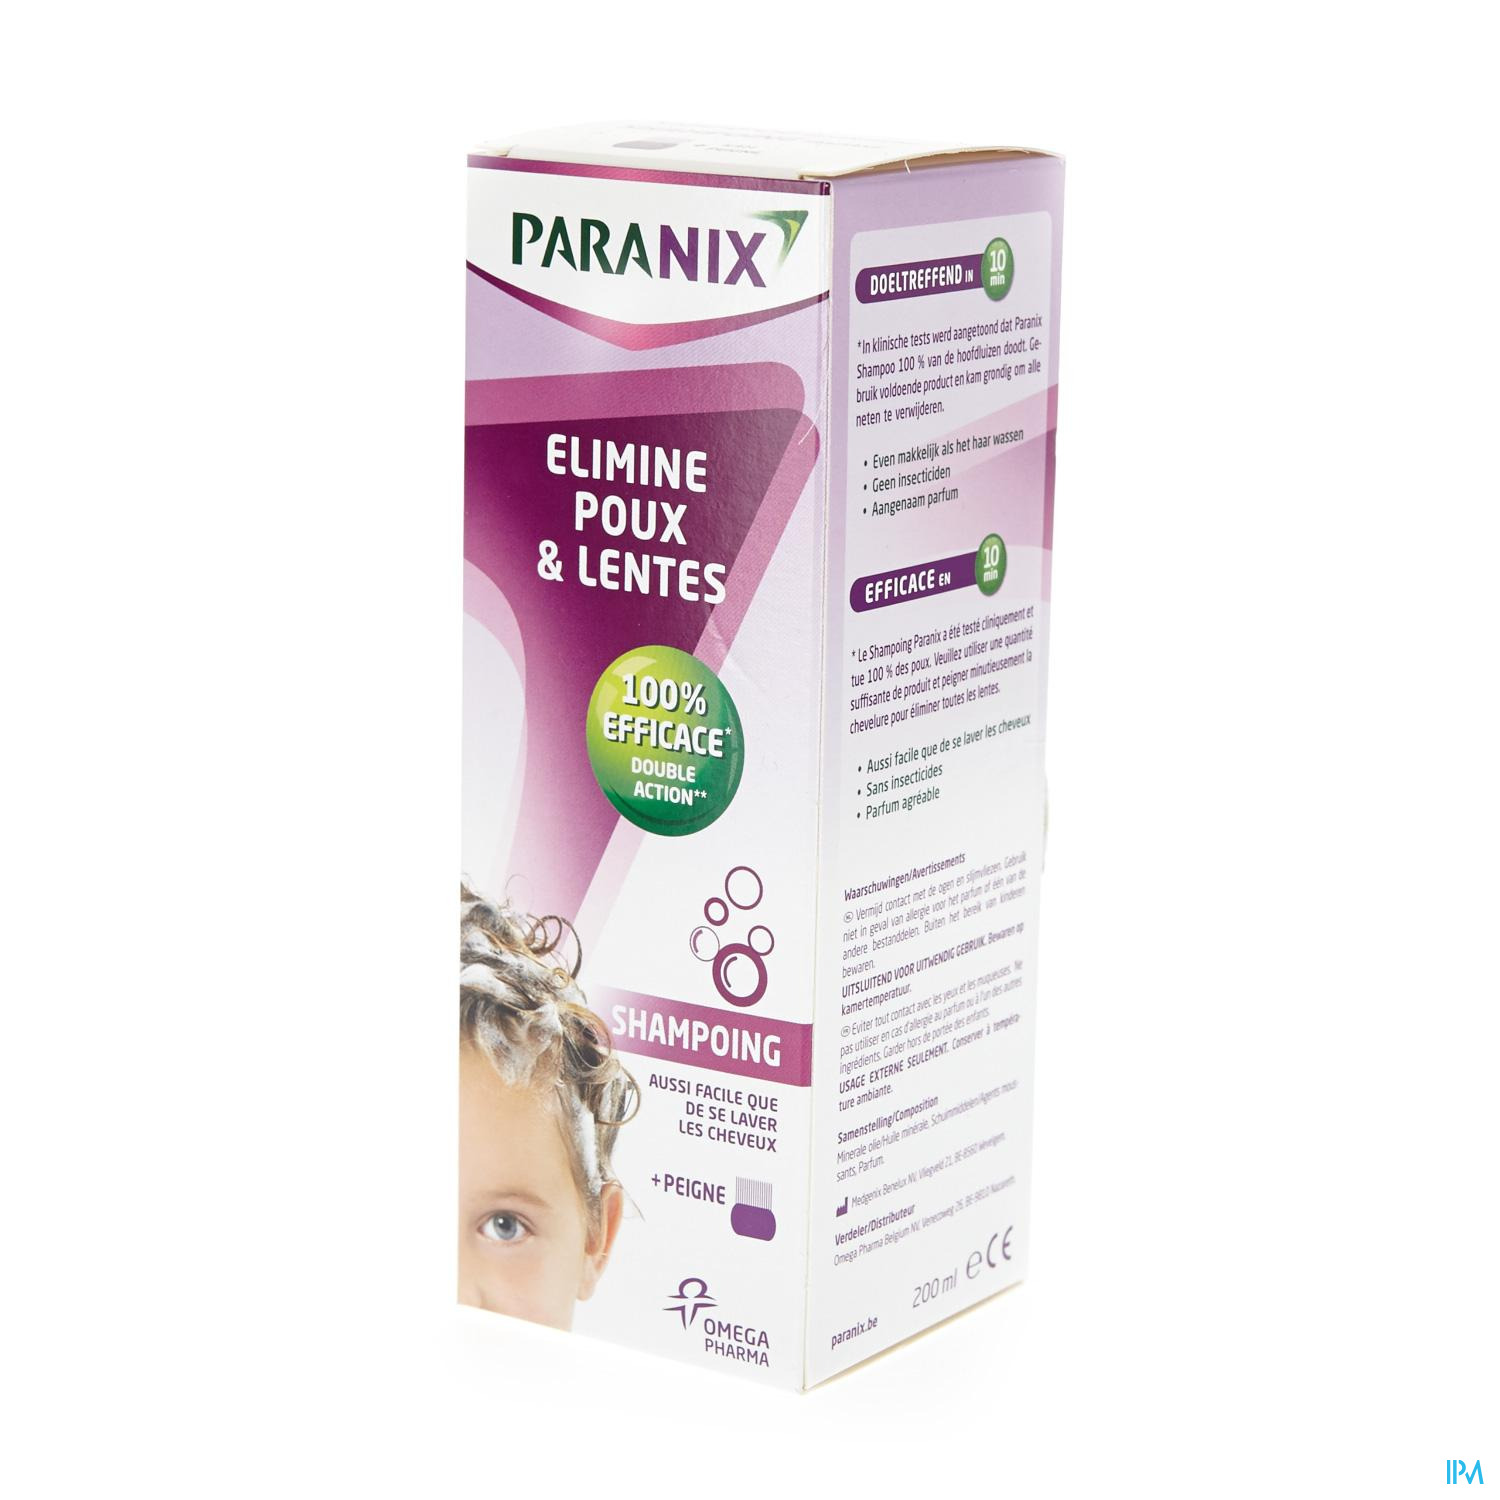 Paranix Shampoo 200ml+kam Promo